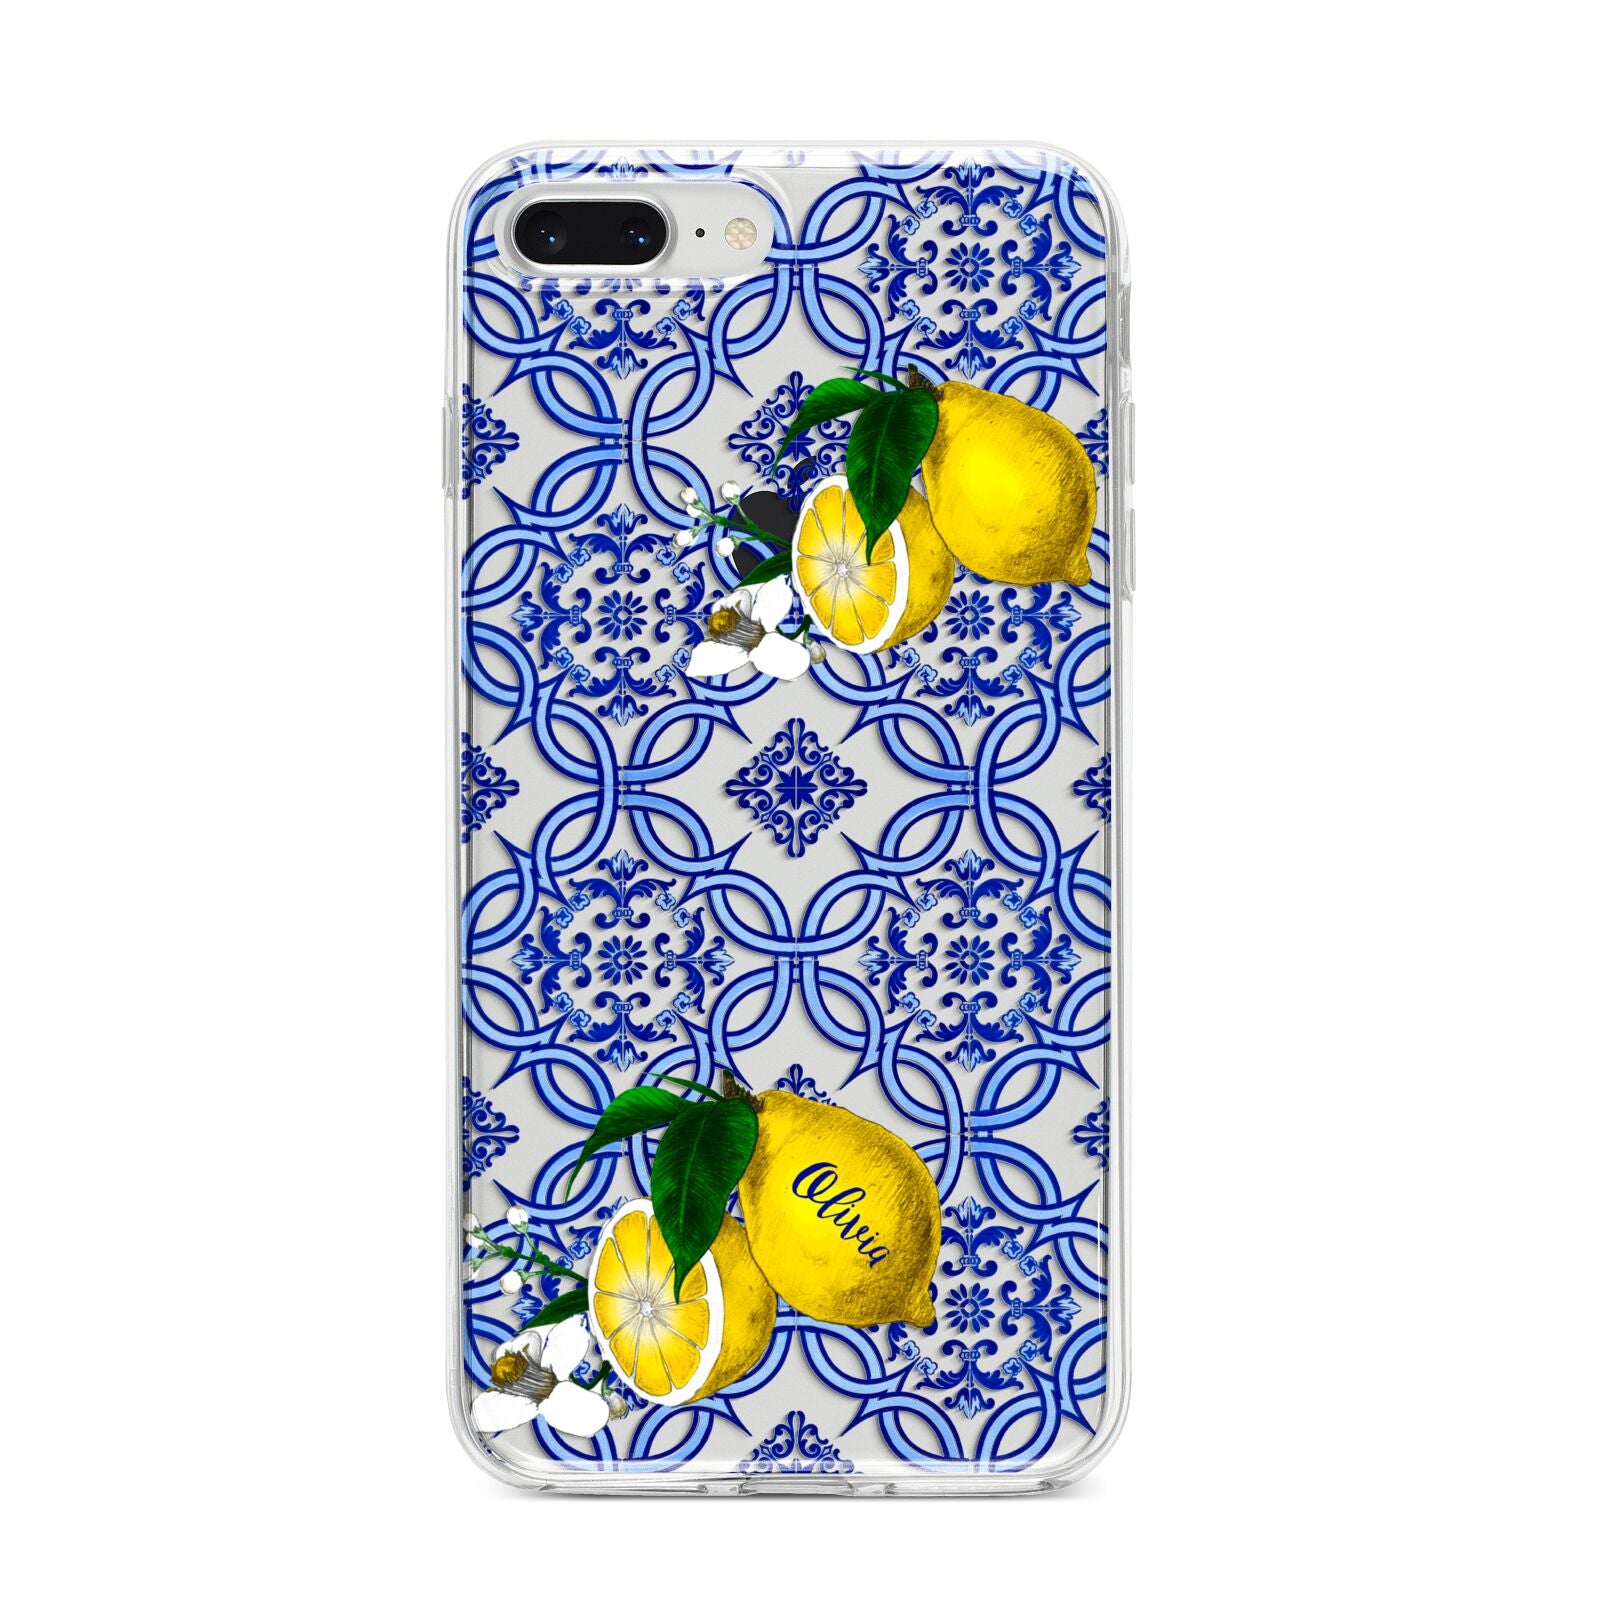 Personalised Mediterranean Tiles and Lemons iPhone 8 Plus Bumper Case on Silver iPhone